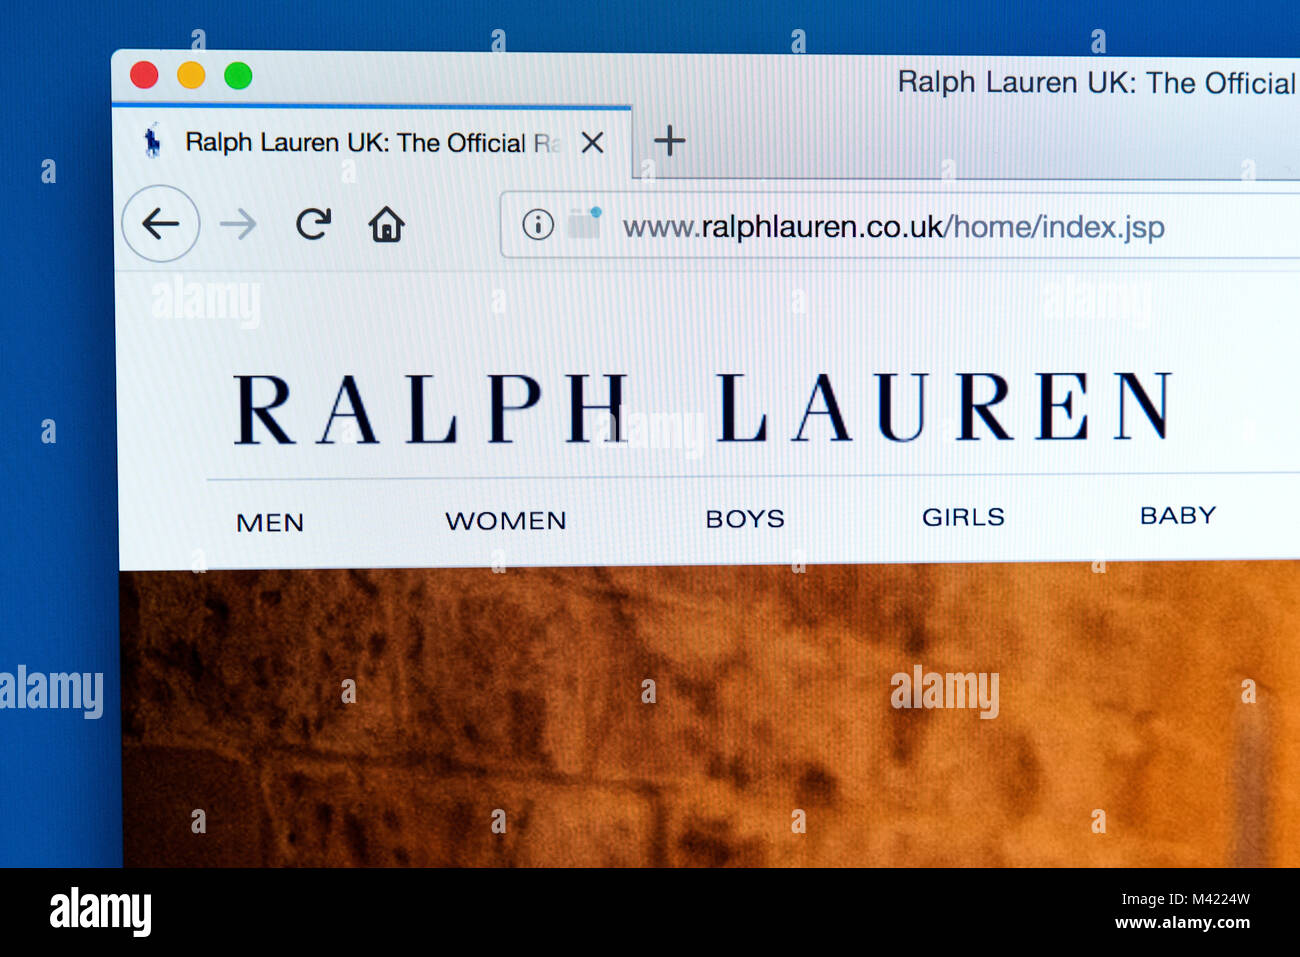 Ralph lauren designer label hi-res stock photography and images - Alamy